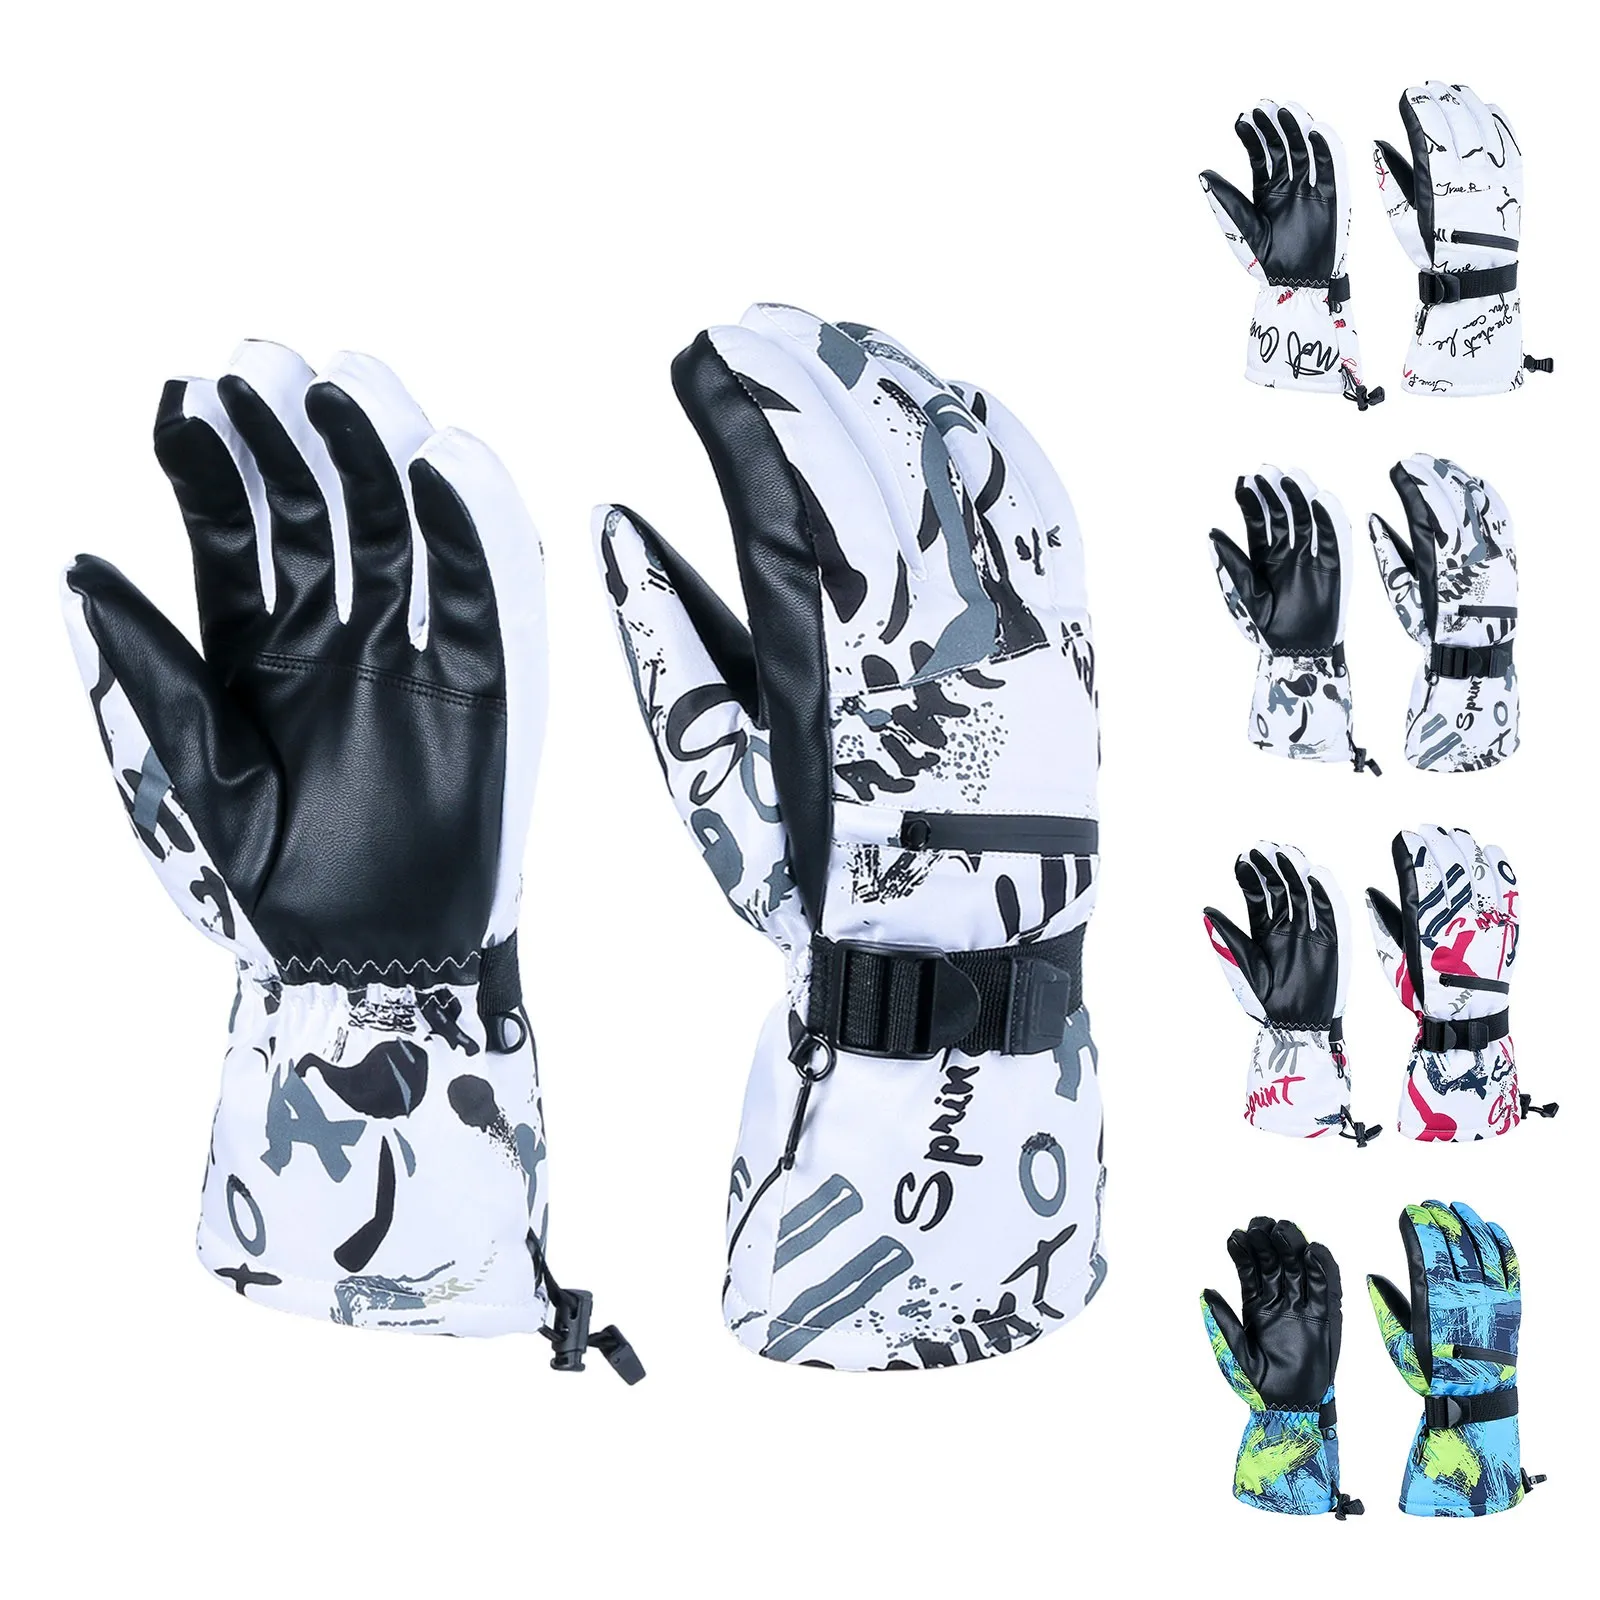 

Ski Gloves Waterproof Breathable Snowboard Gloves Touchscreen Warm Winter Snow Gloves Fits Both Men & Women